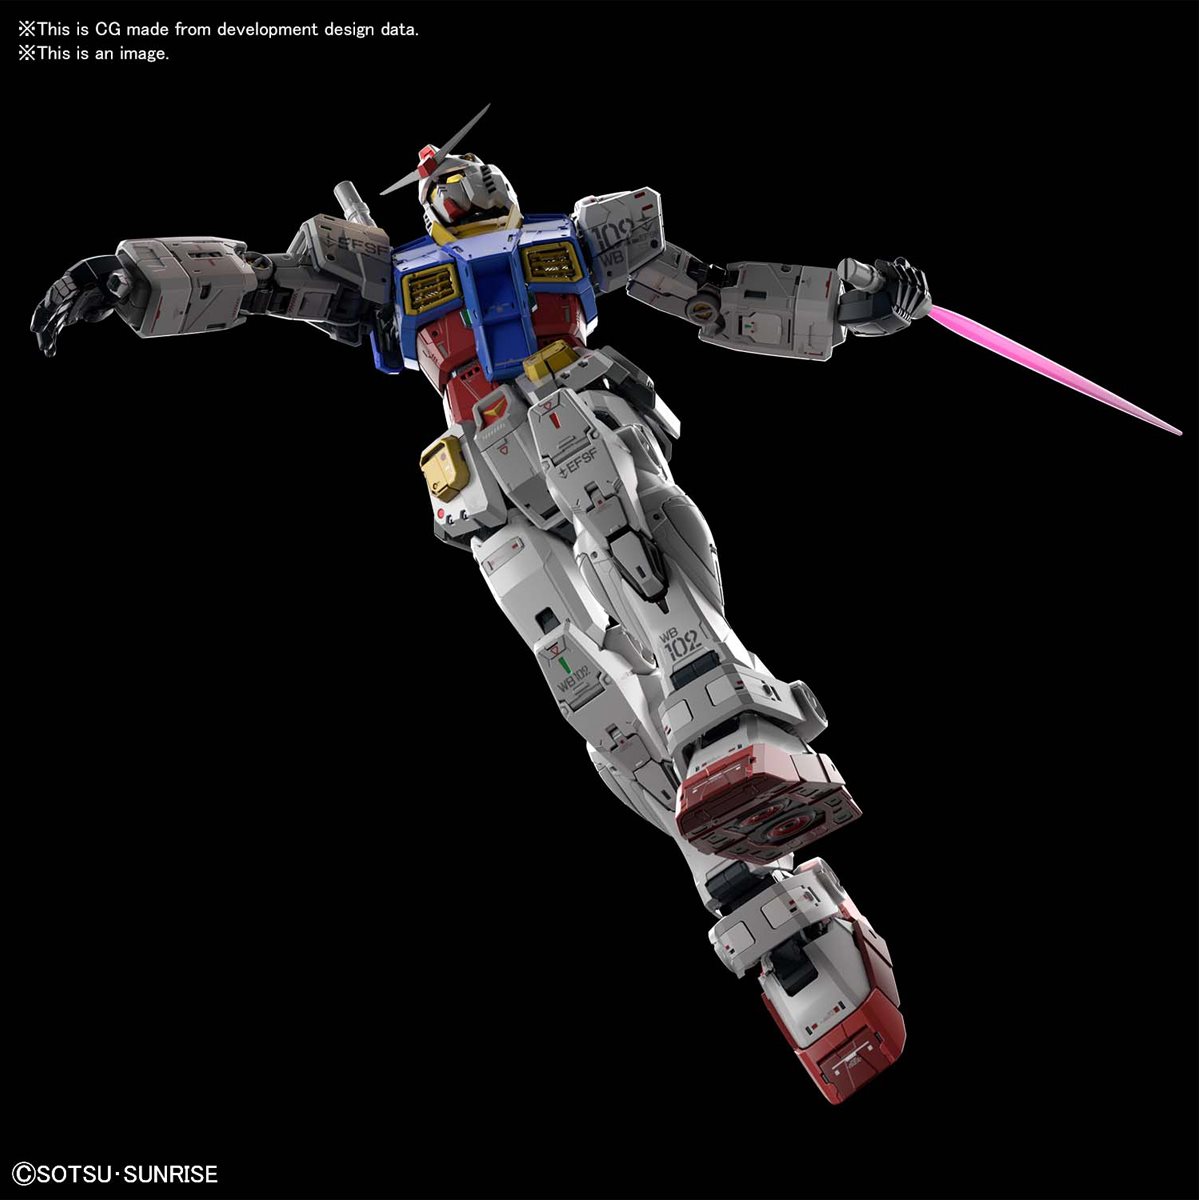 Mobile Suit Gundam Rx 78 2 Gundam Pg Unleashed 1 60 Scale Model Kit